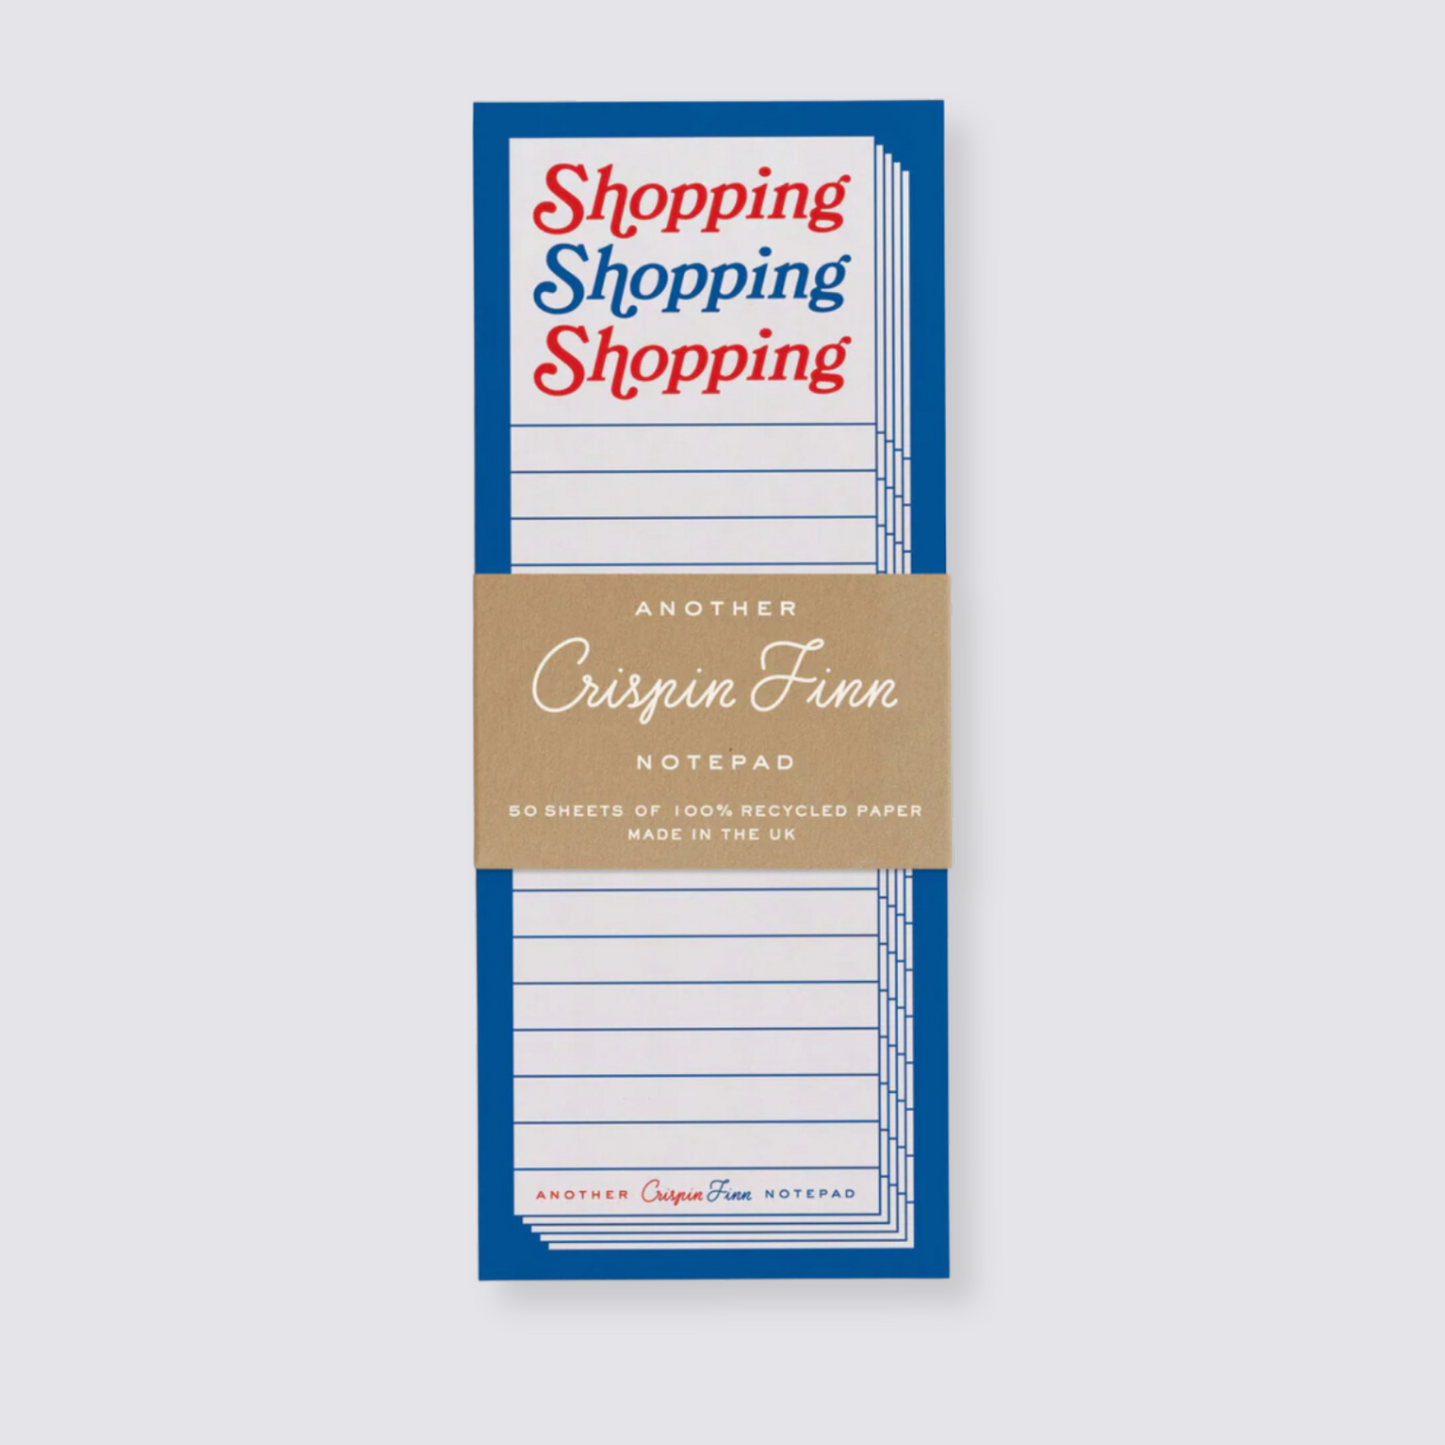 crispin finn shopping shopping shopping note pad